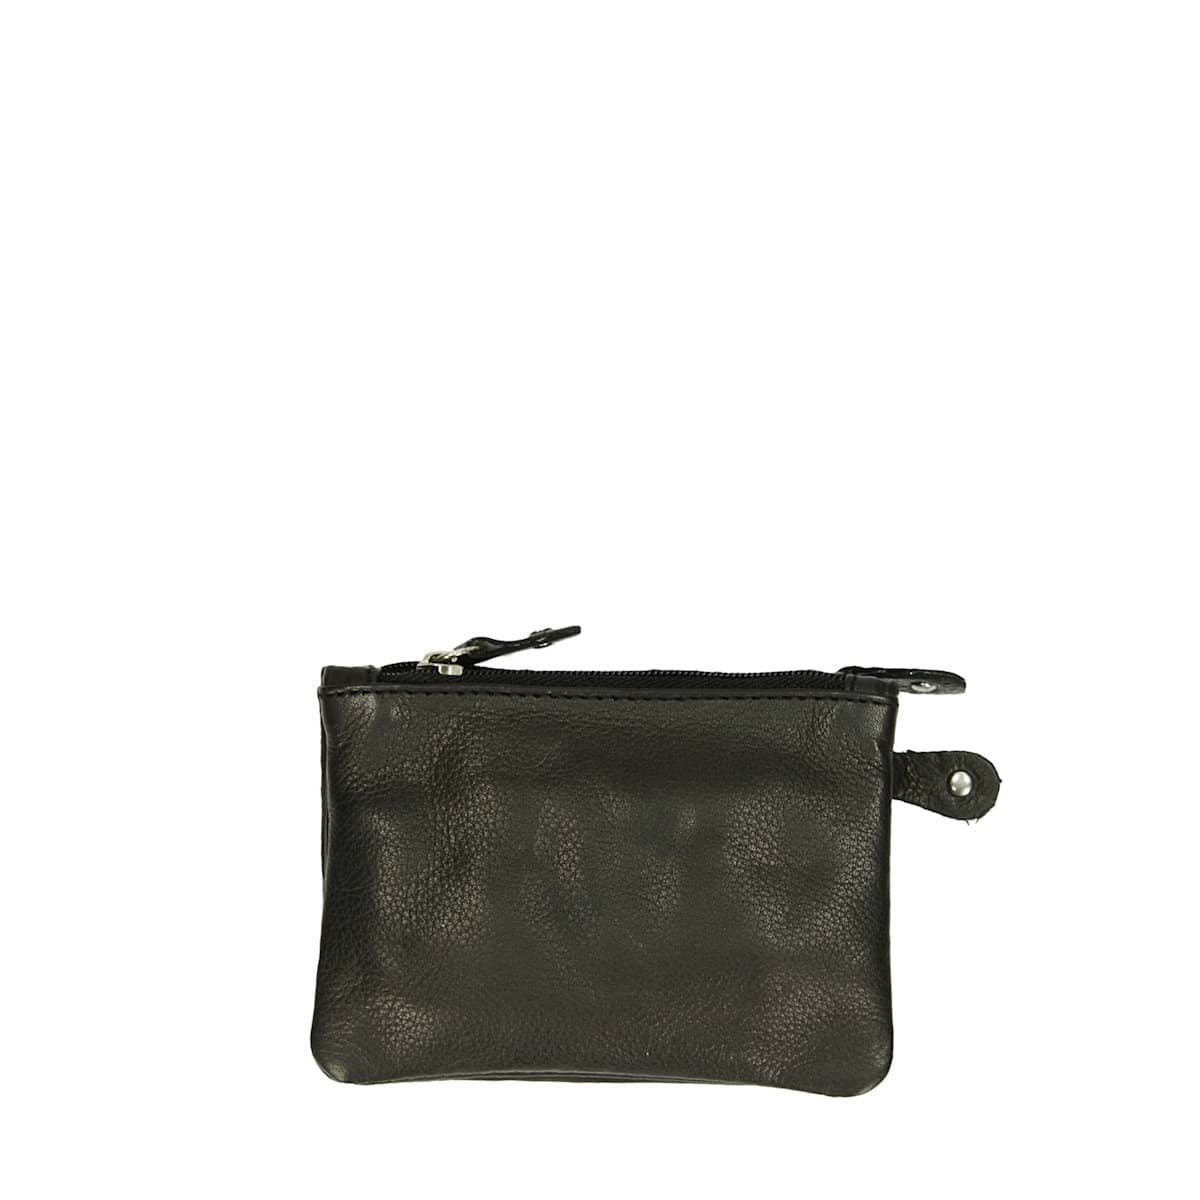 Buy Men Black Genuine Leather Wallet Online - 746598 | Van Heusen